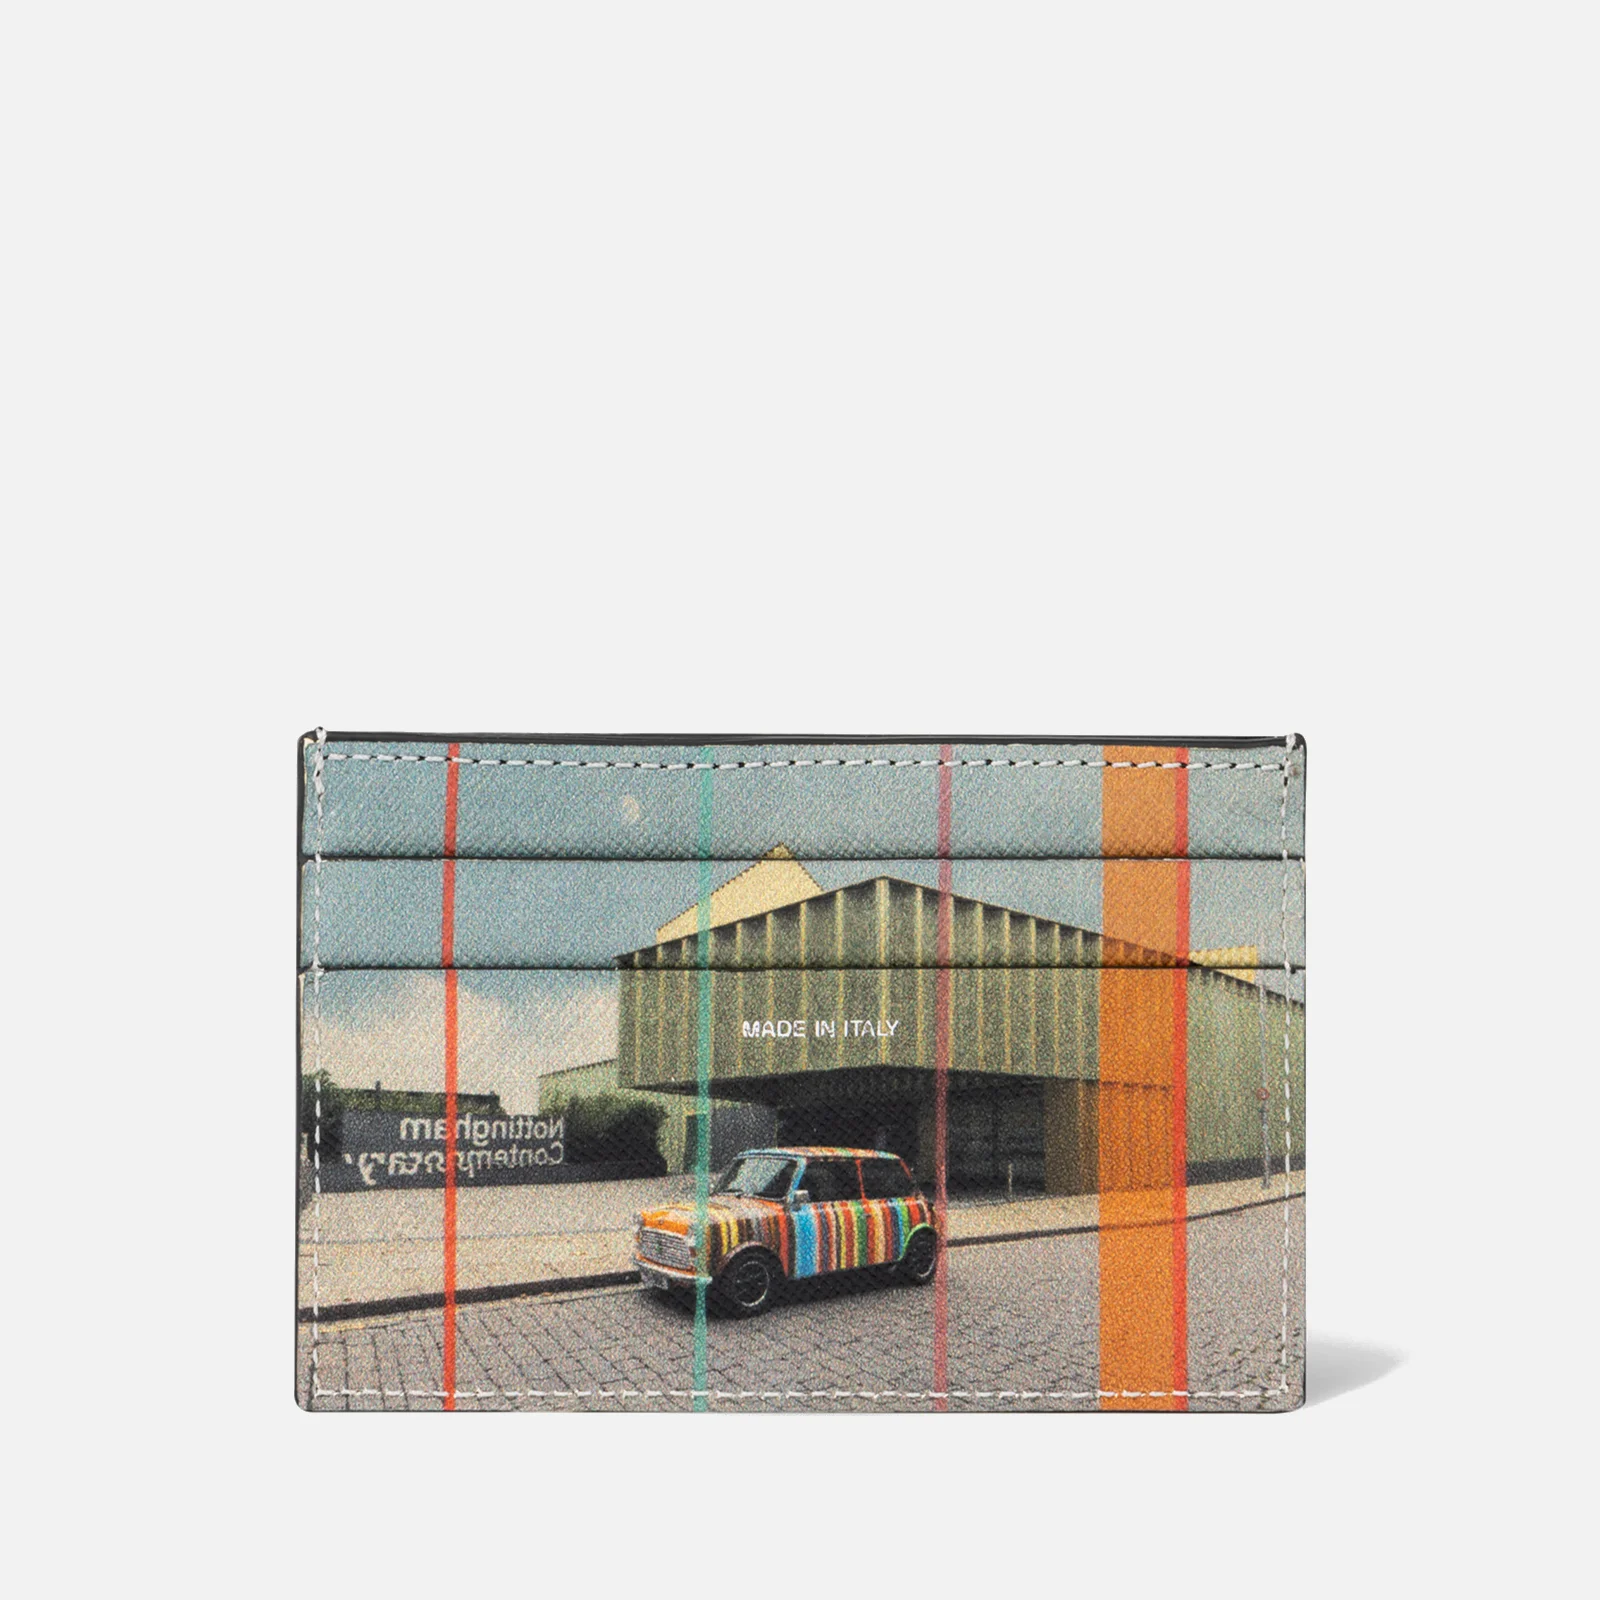 Paul Smith Leather Mini Cardholder Image 1